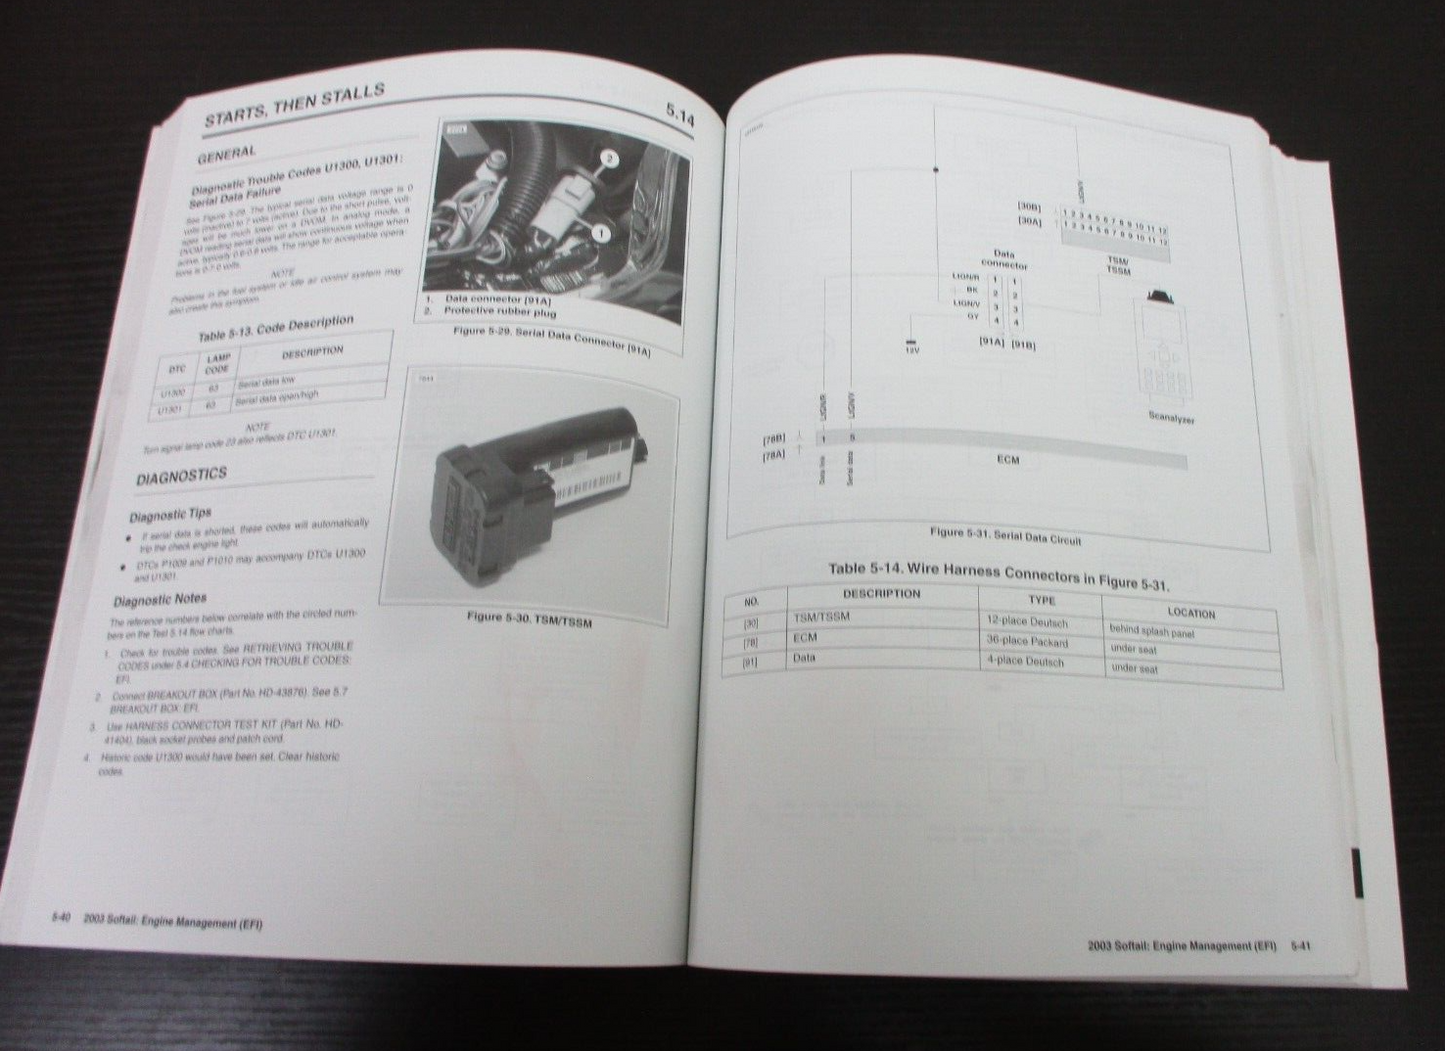 Harley-Davidson  Softail Models 2003 Electrical Diagnostic Manual 99498-03